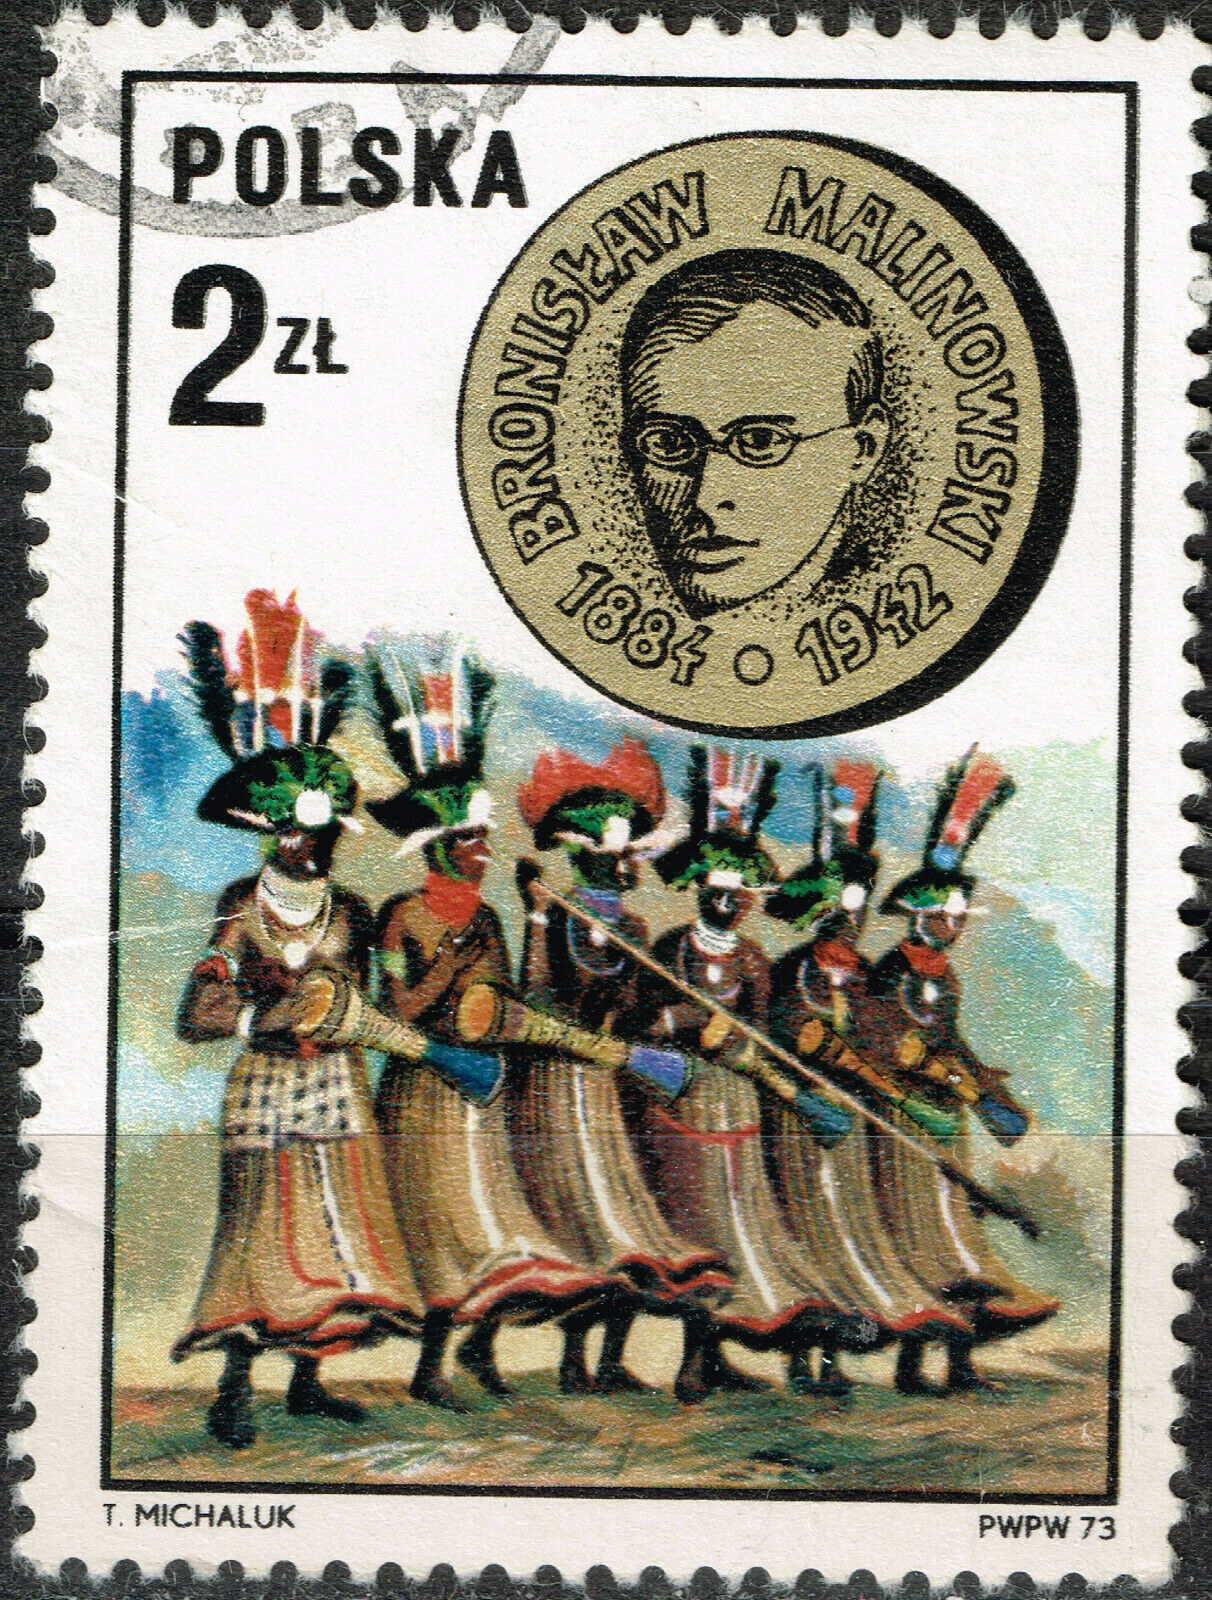 Poland Papua Culture Ethnicities Bronislaw Malinowski Stamp 1973